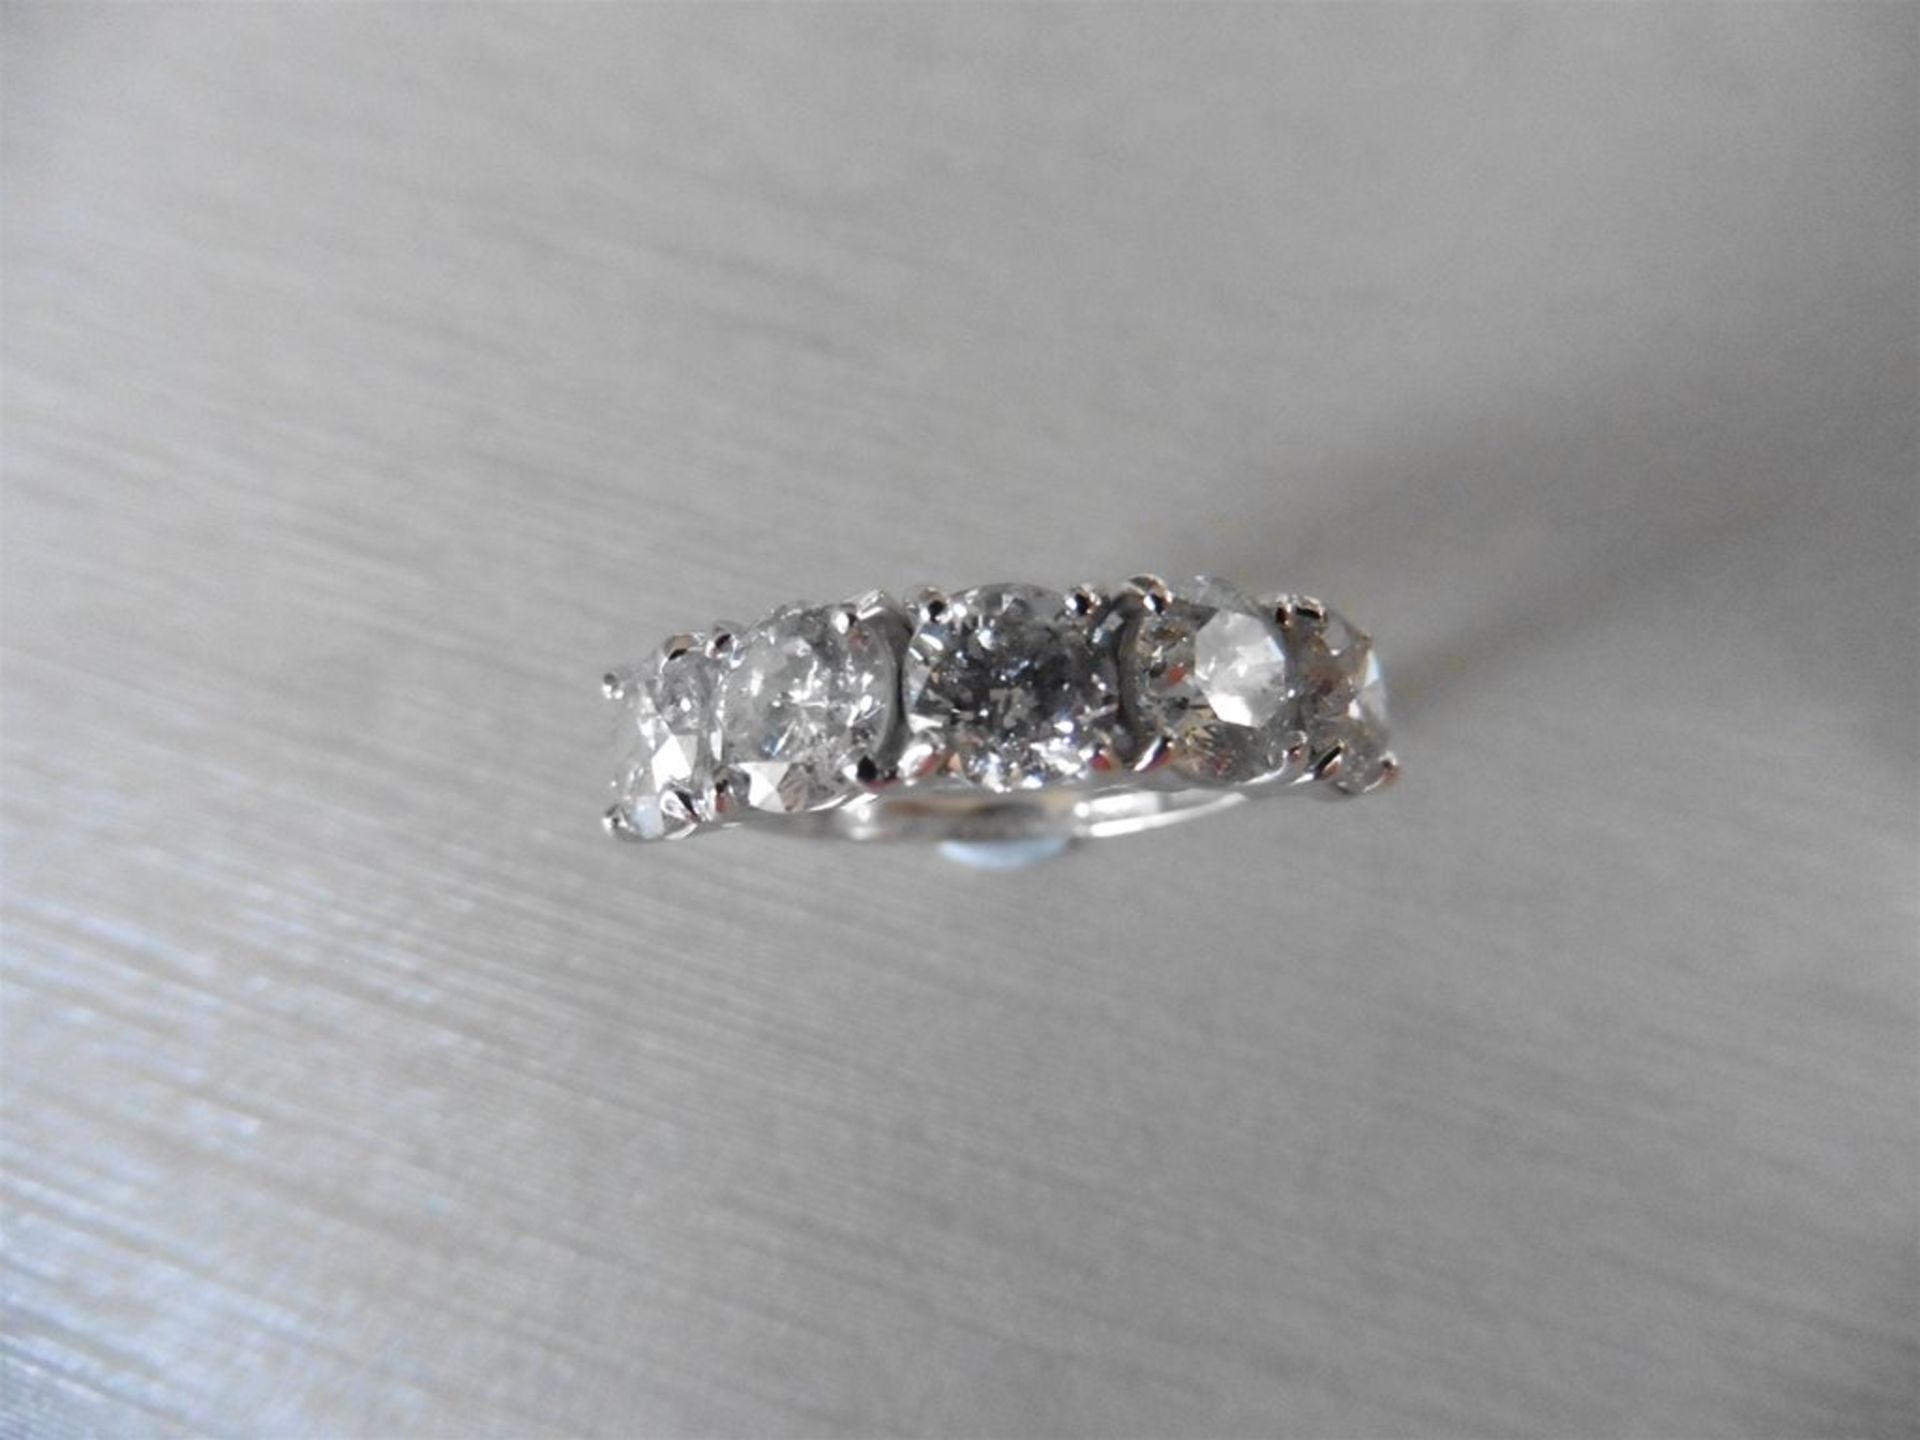 2.50ct Diamond 5 stone ring set with 5 brilliant cut diamonds, I/J colour, i1 clarity. Four claw se